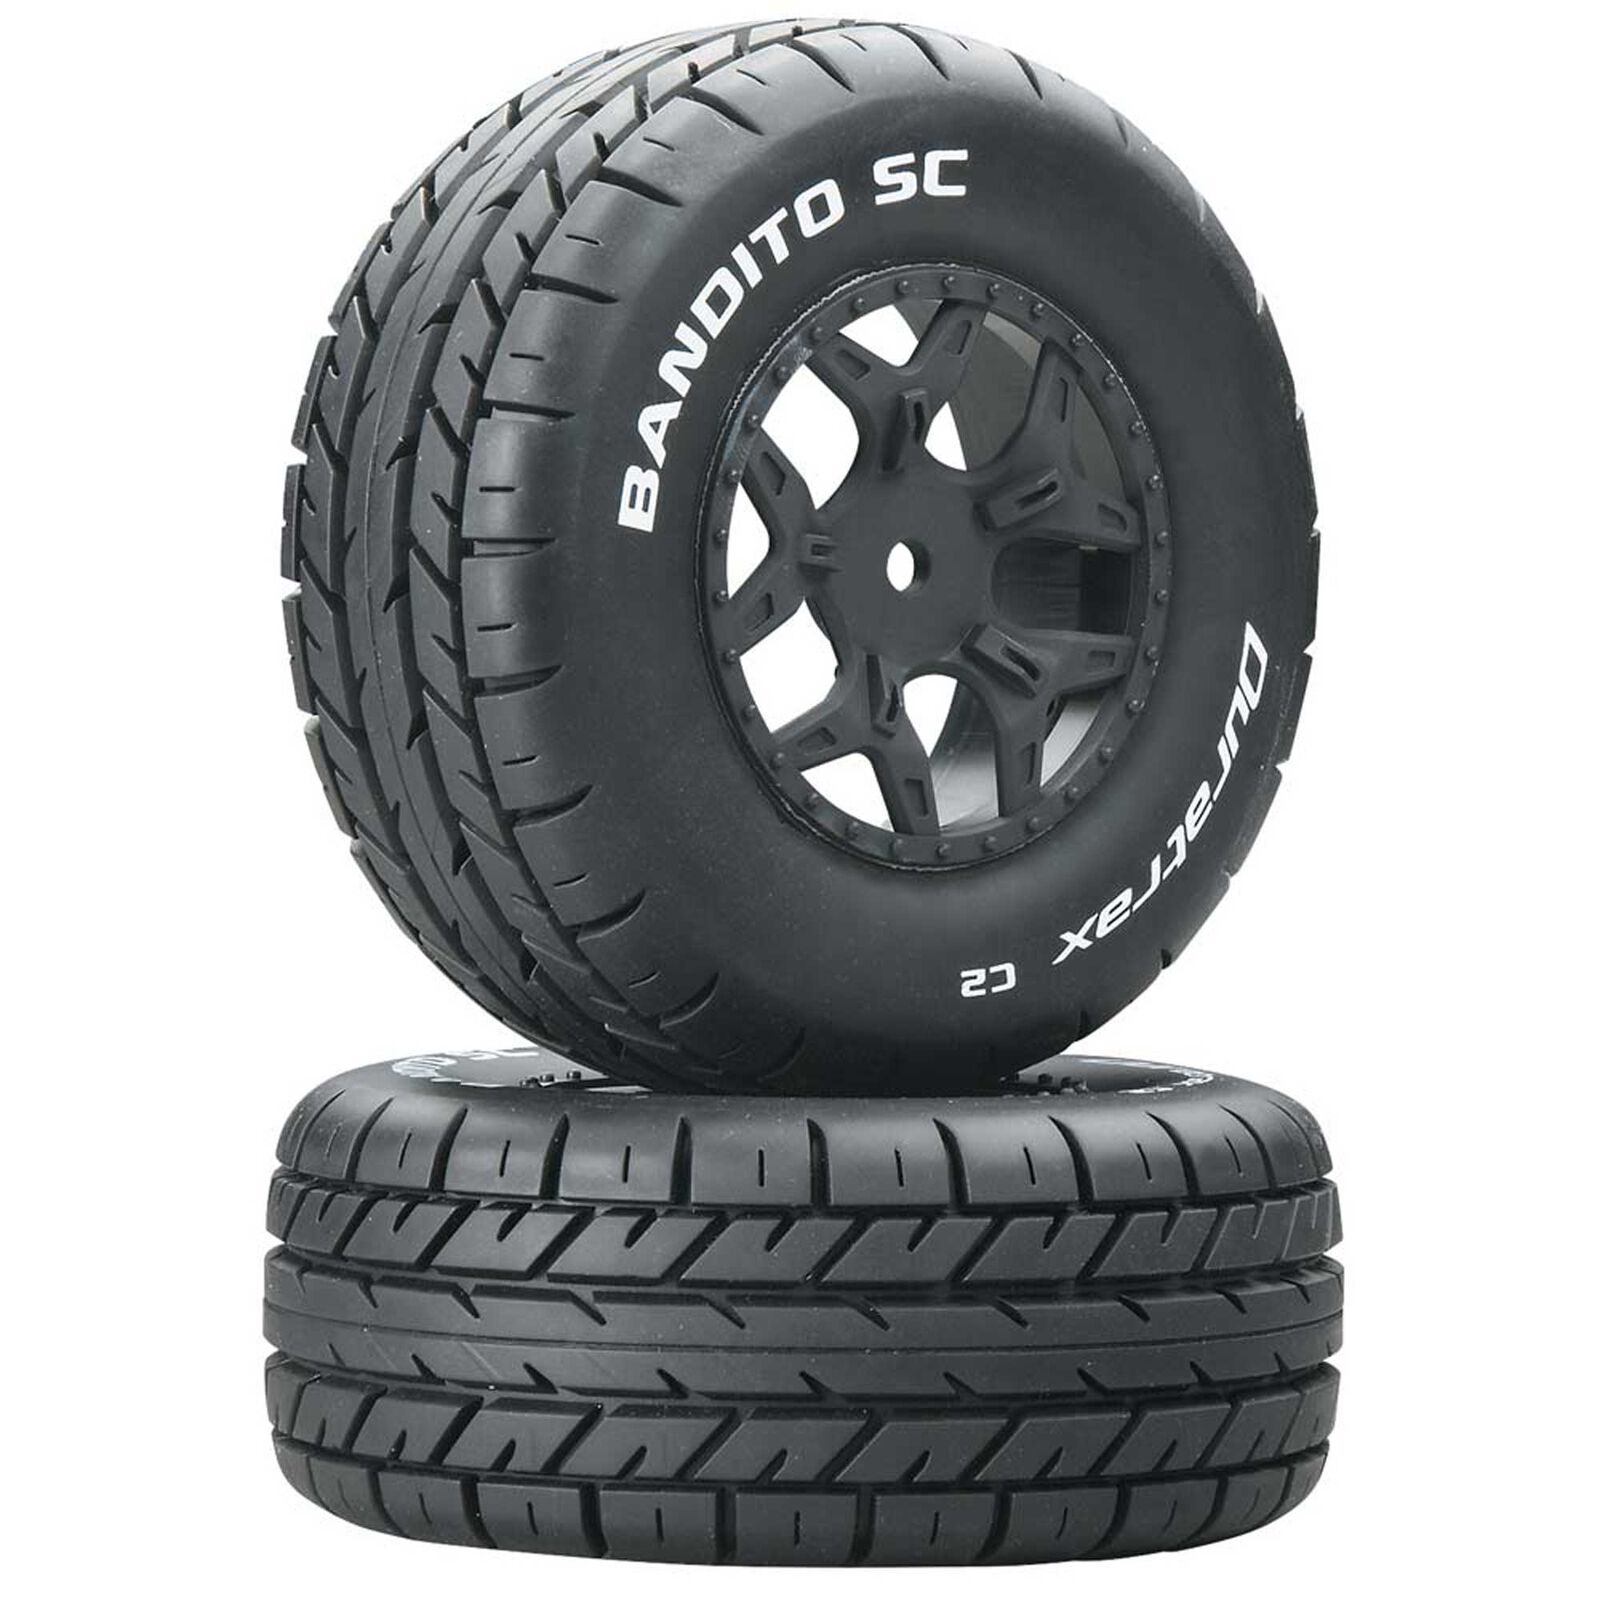 Bandito SC C2 Mounted Tires: SCTE 4x4 (2)